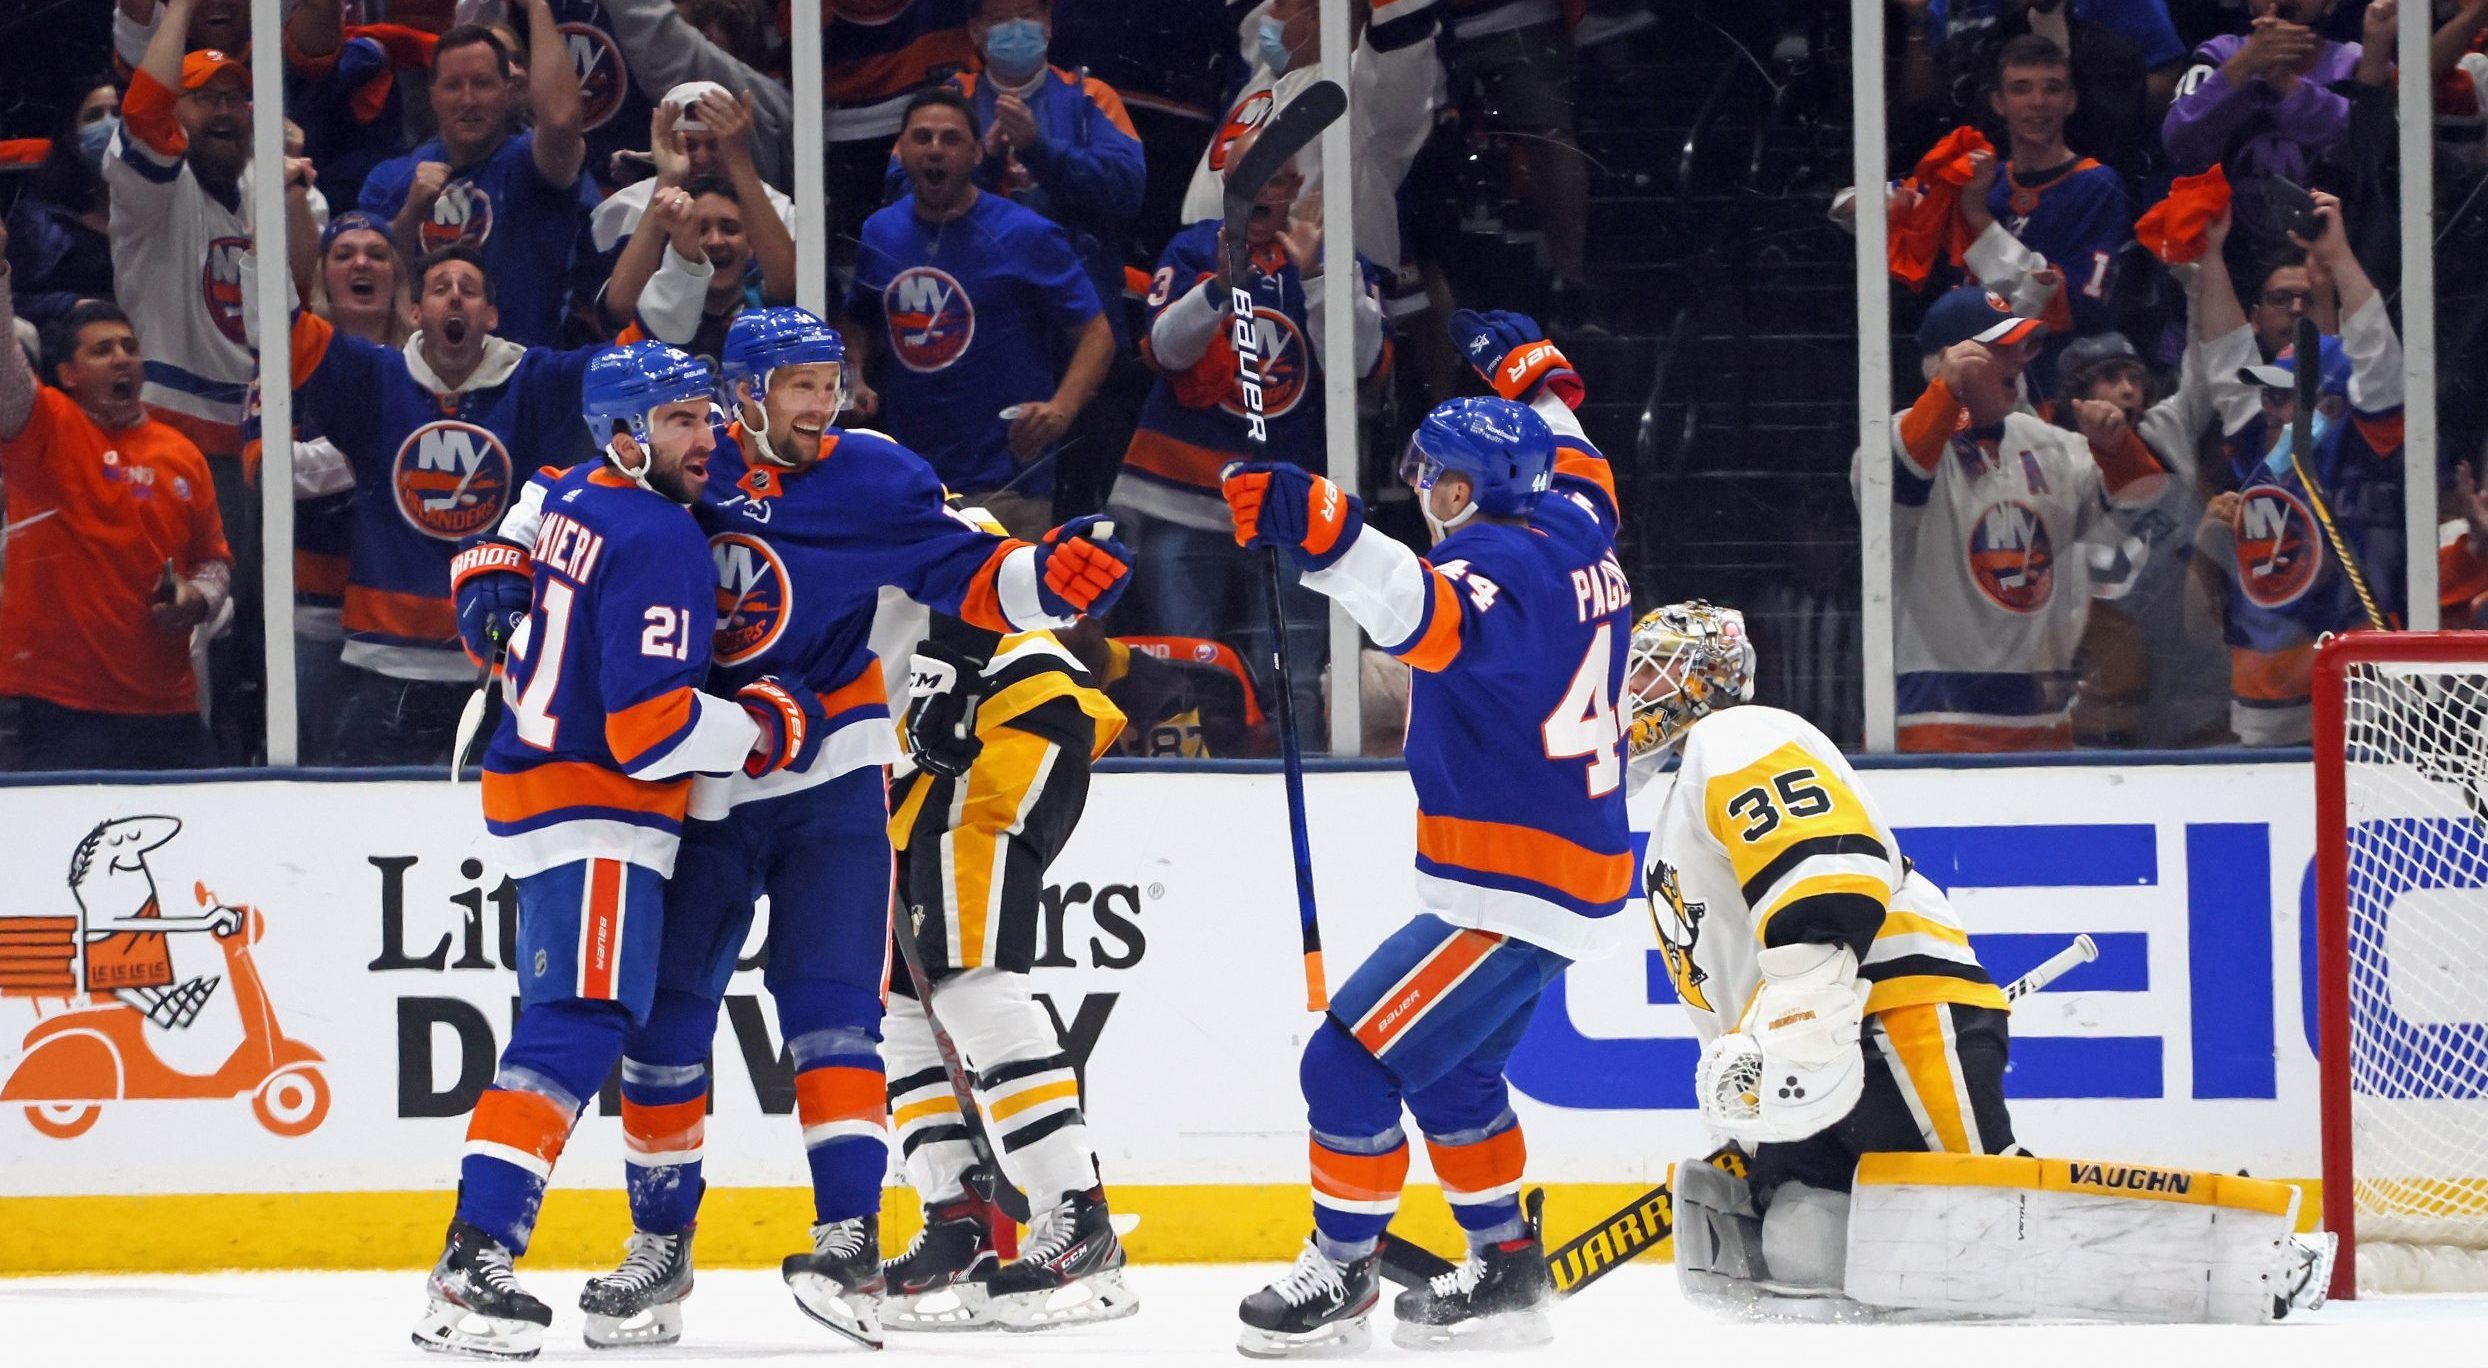 The New York Islanders celebrate a goal